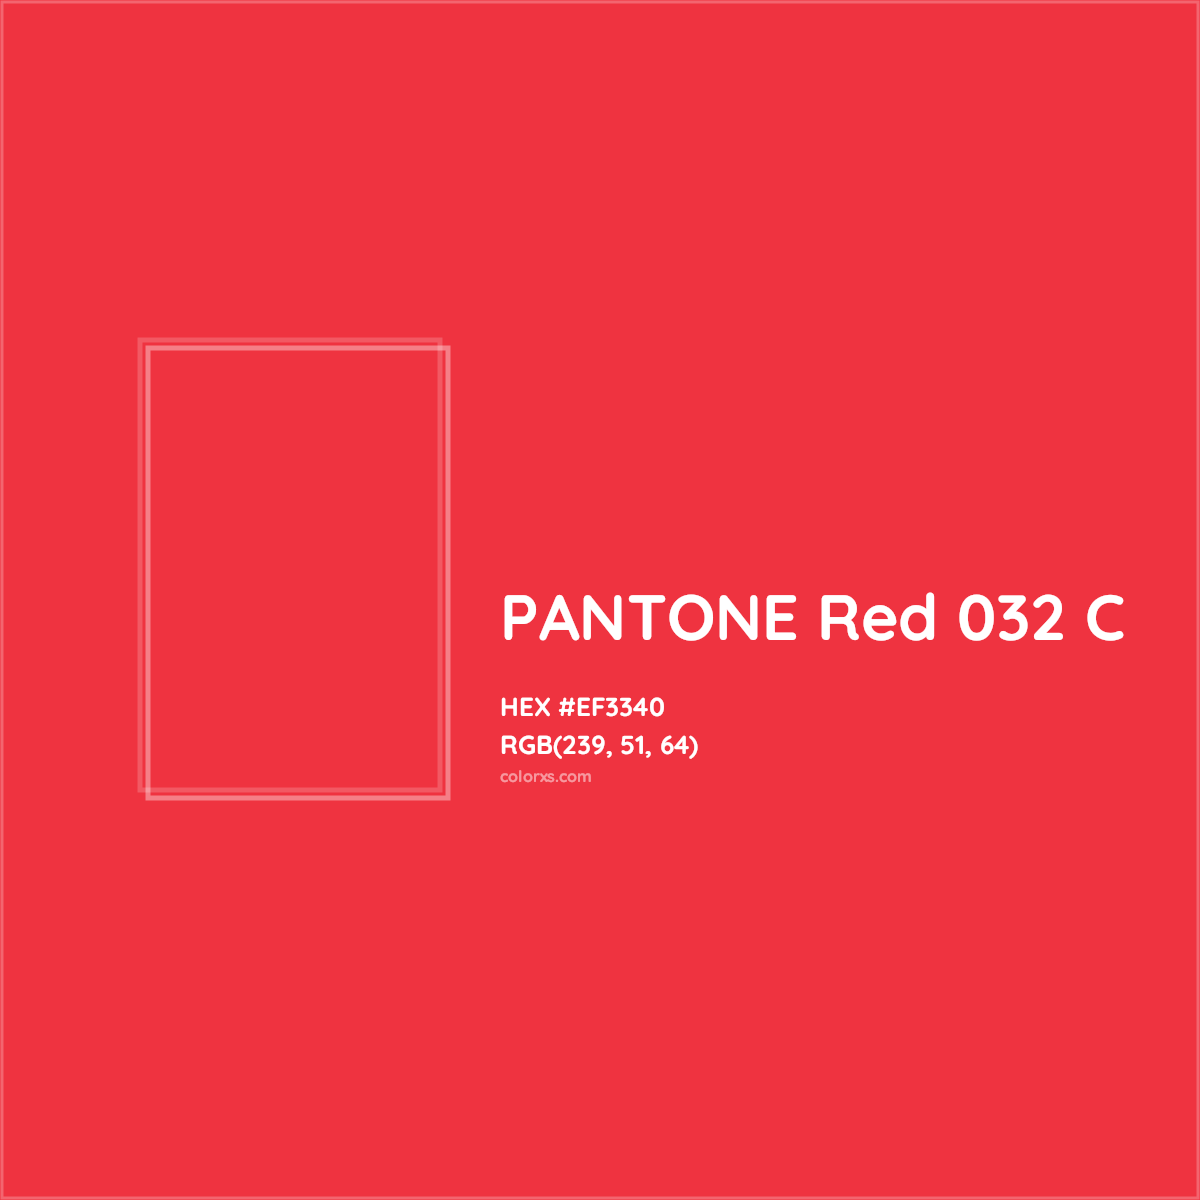 HEX #EF3340 PANTONE Red 032 C CMS Pantone PMS - Color Code